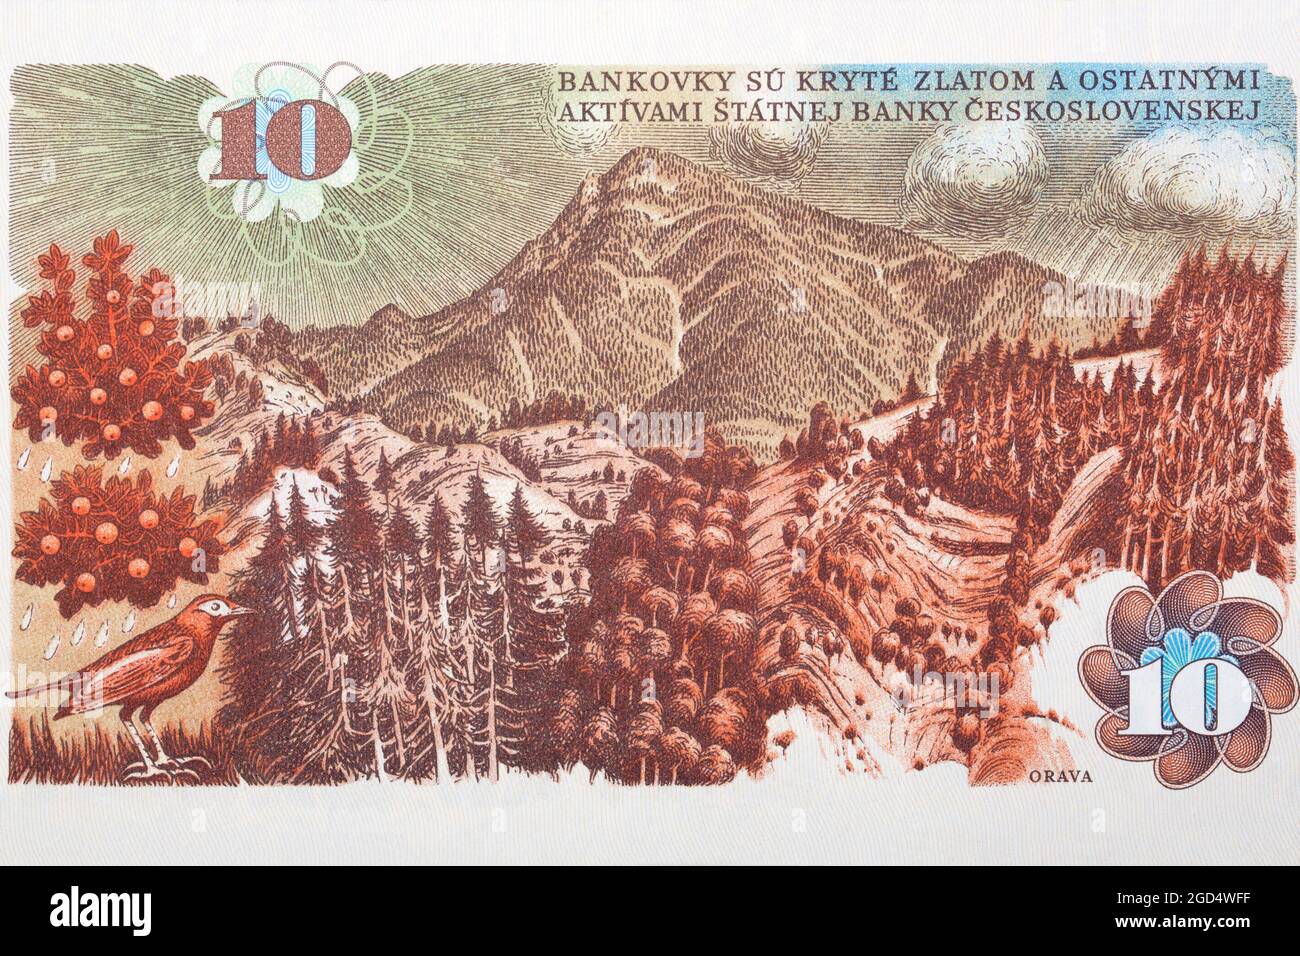 Orava scene from old Czechoslovak money Stock Photo